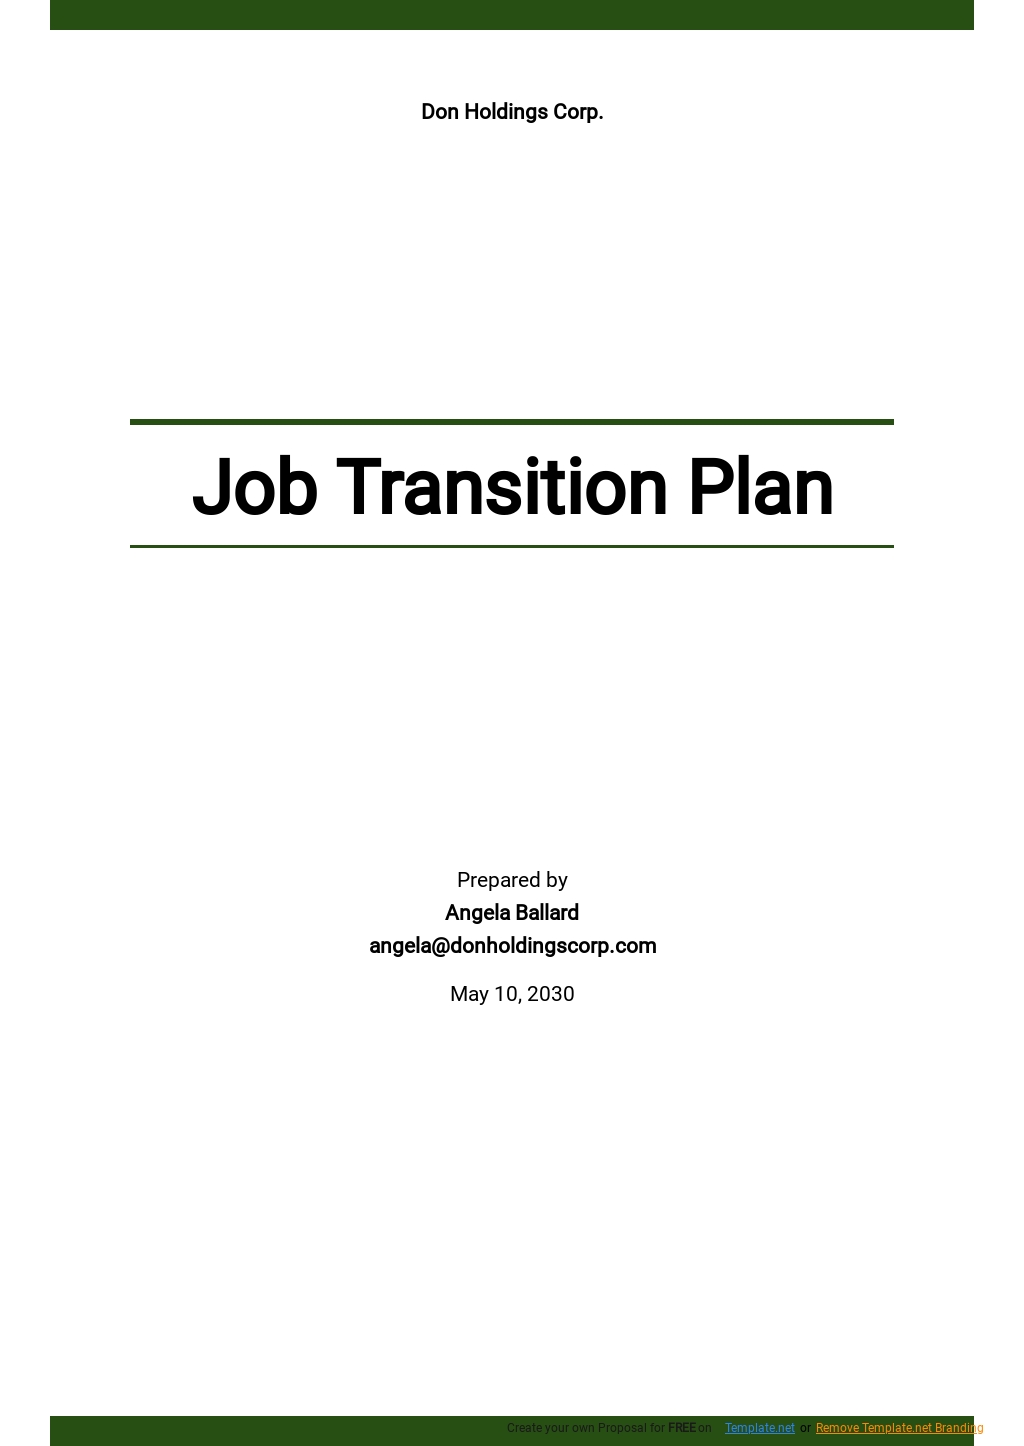 Free Sample Job Transition Plan Template